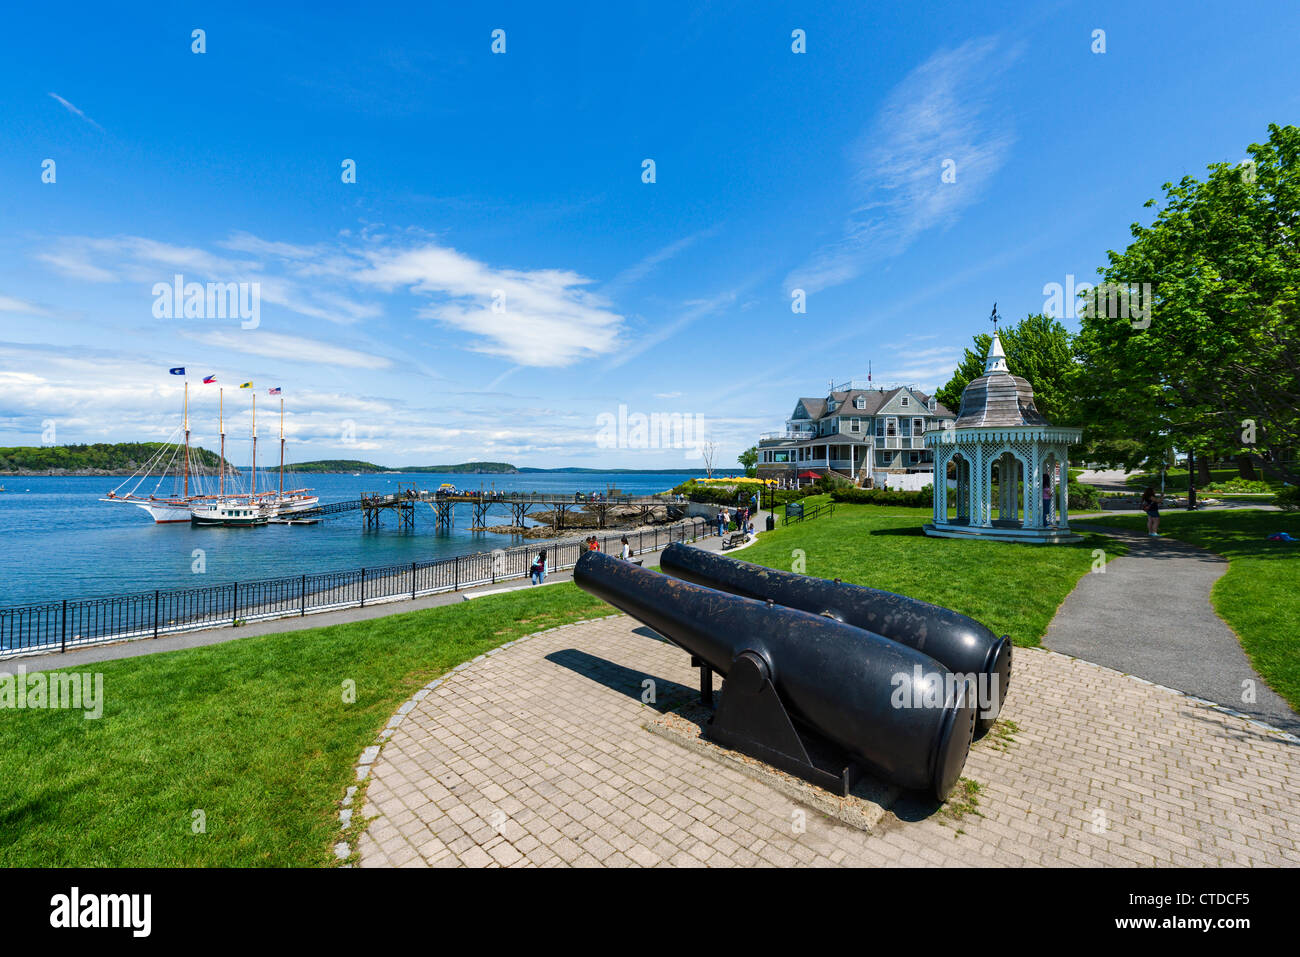 The harbour looking towards the Bar Harbor Inn, Bar Harbor, Mount Desert Island, Maine, USA Stock Photo